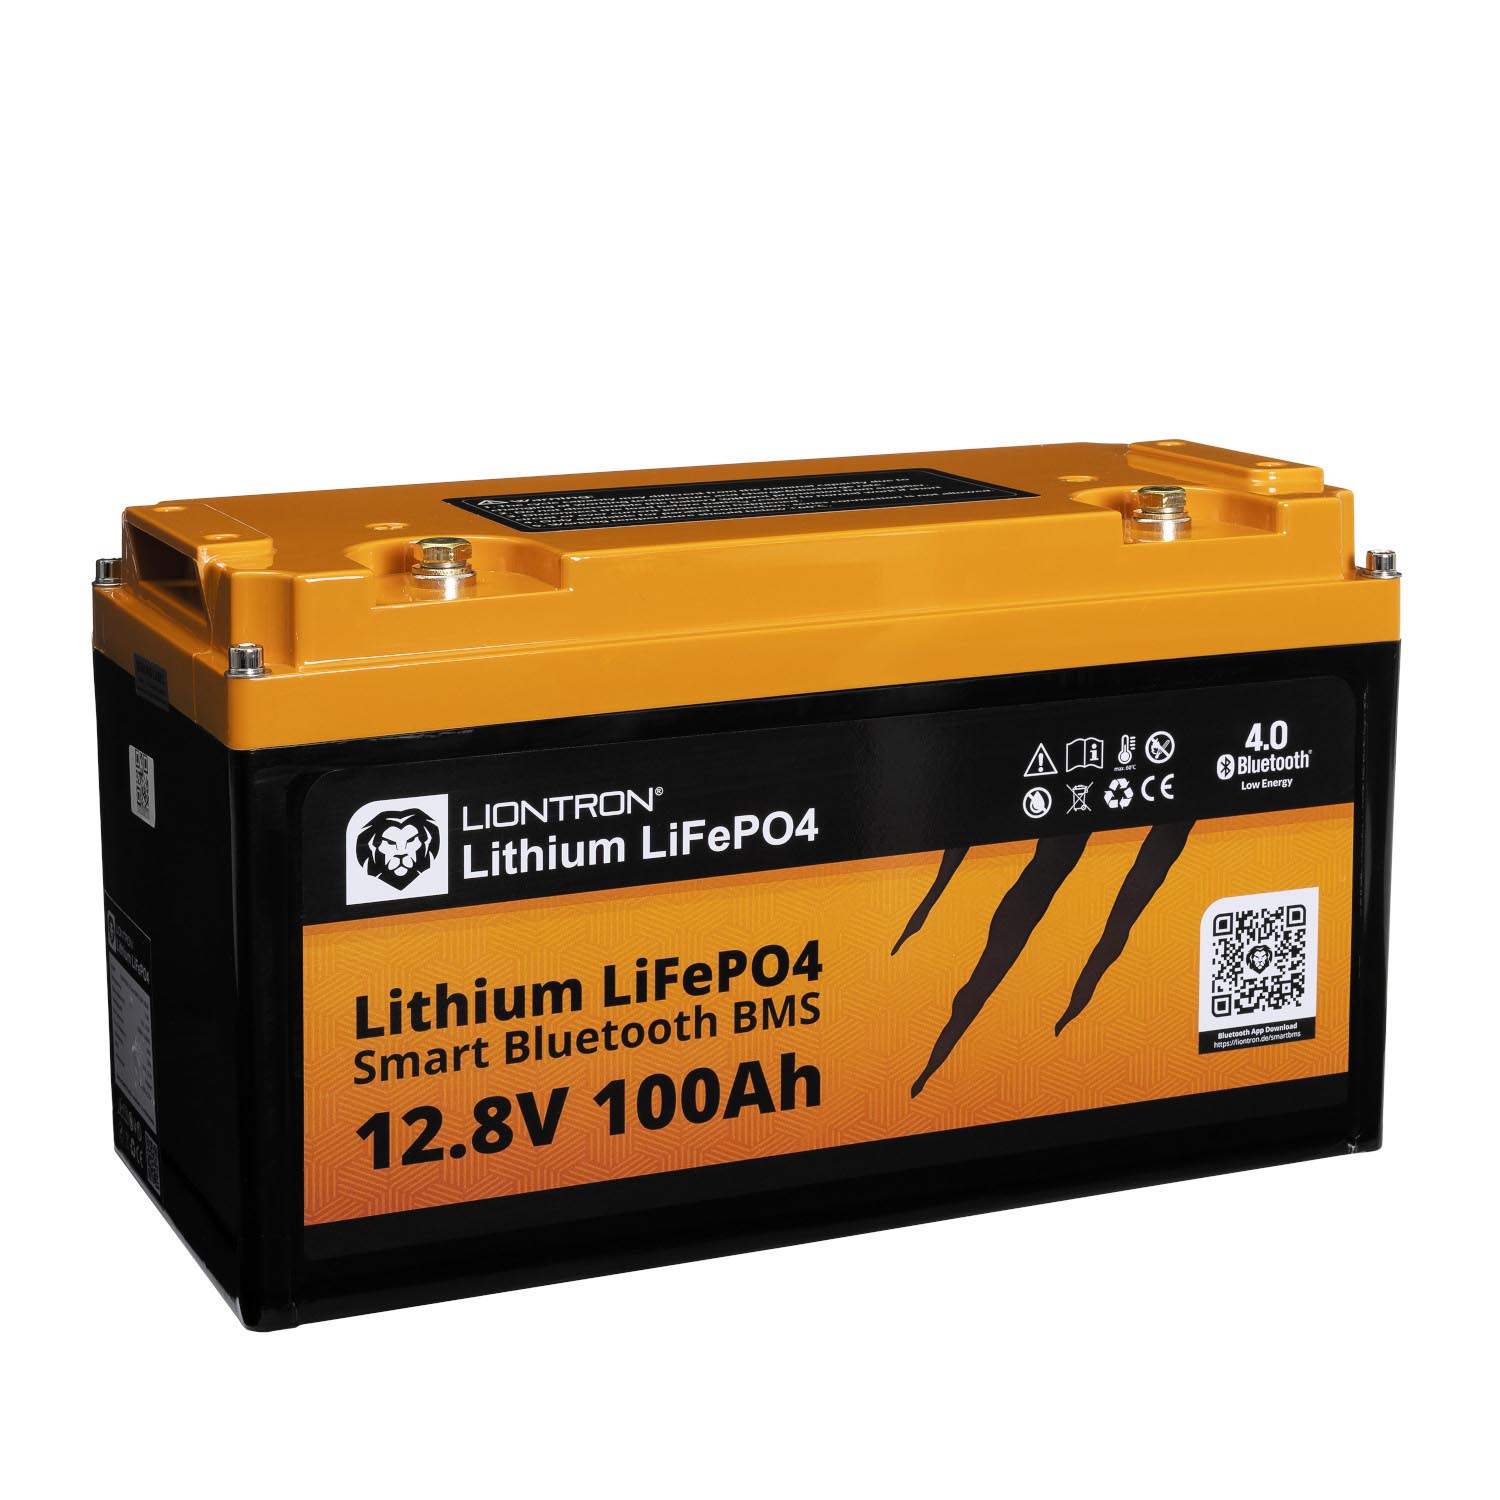 https://batterie24.de/media/image/22/24/43/liontron-100ah-12v-lifepo4-lithium-batterie-wohnmobil-bms-mit-23125-hLjC.jpg